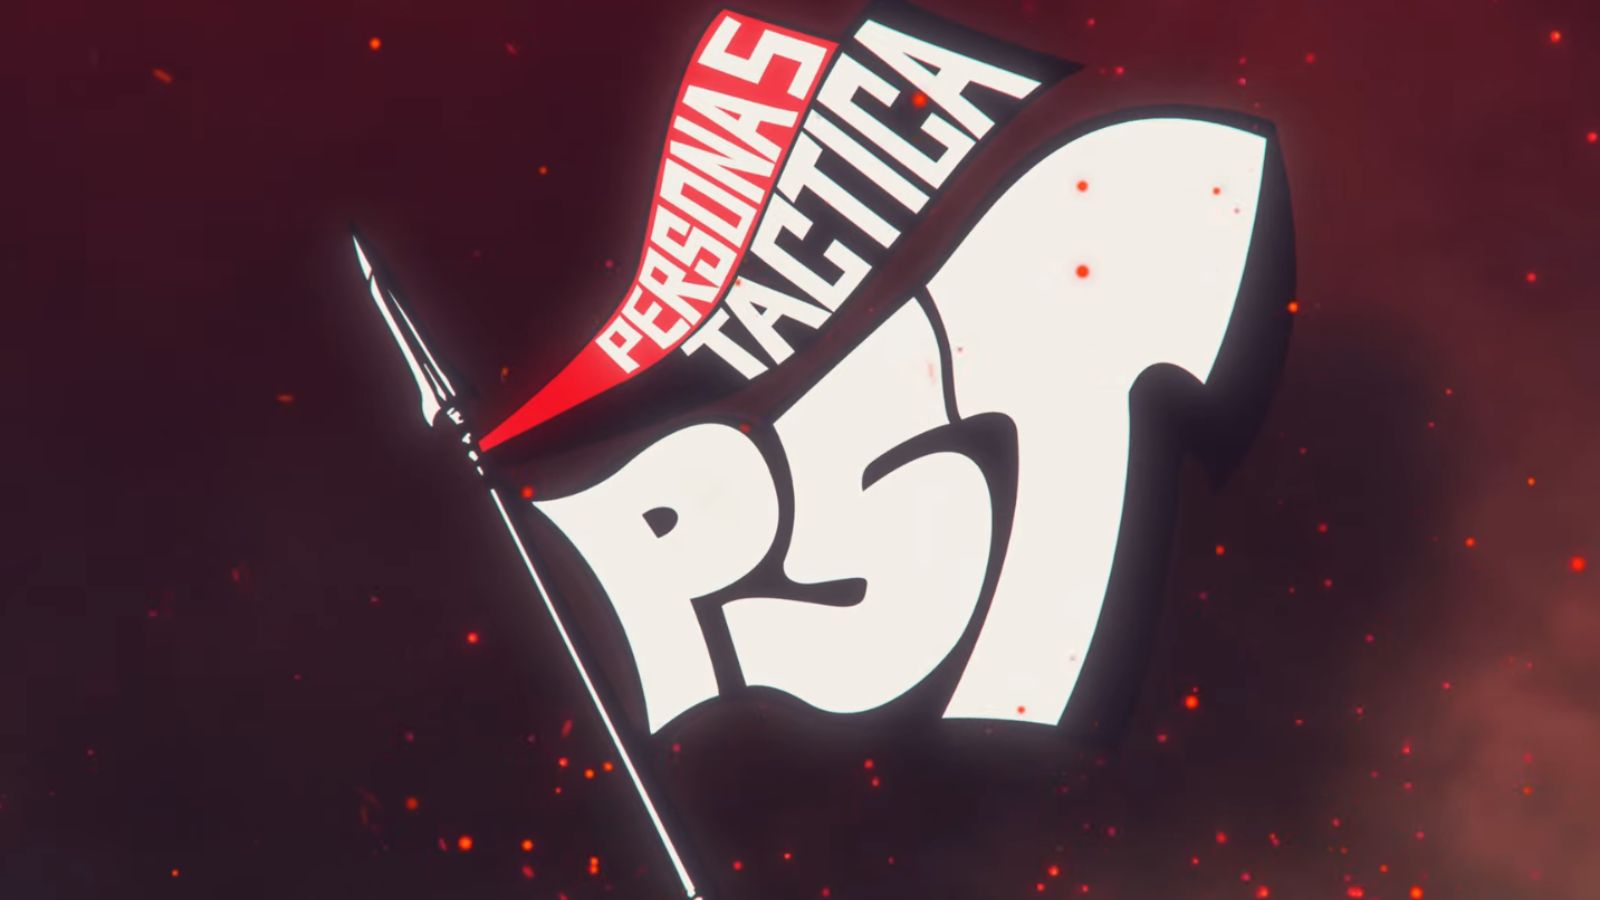 Persona 5 Tactica: Release date, platforms, trailer & more - Dexerto